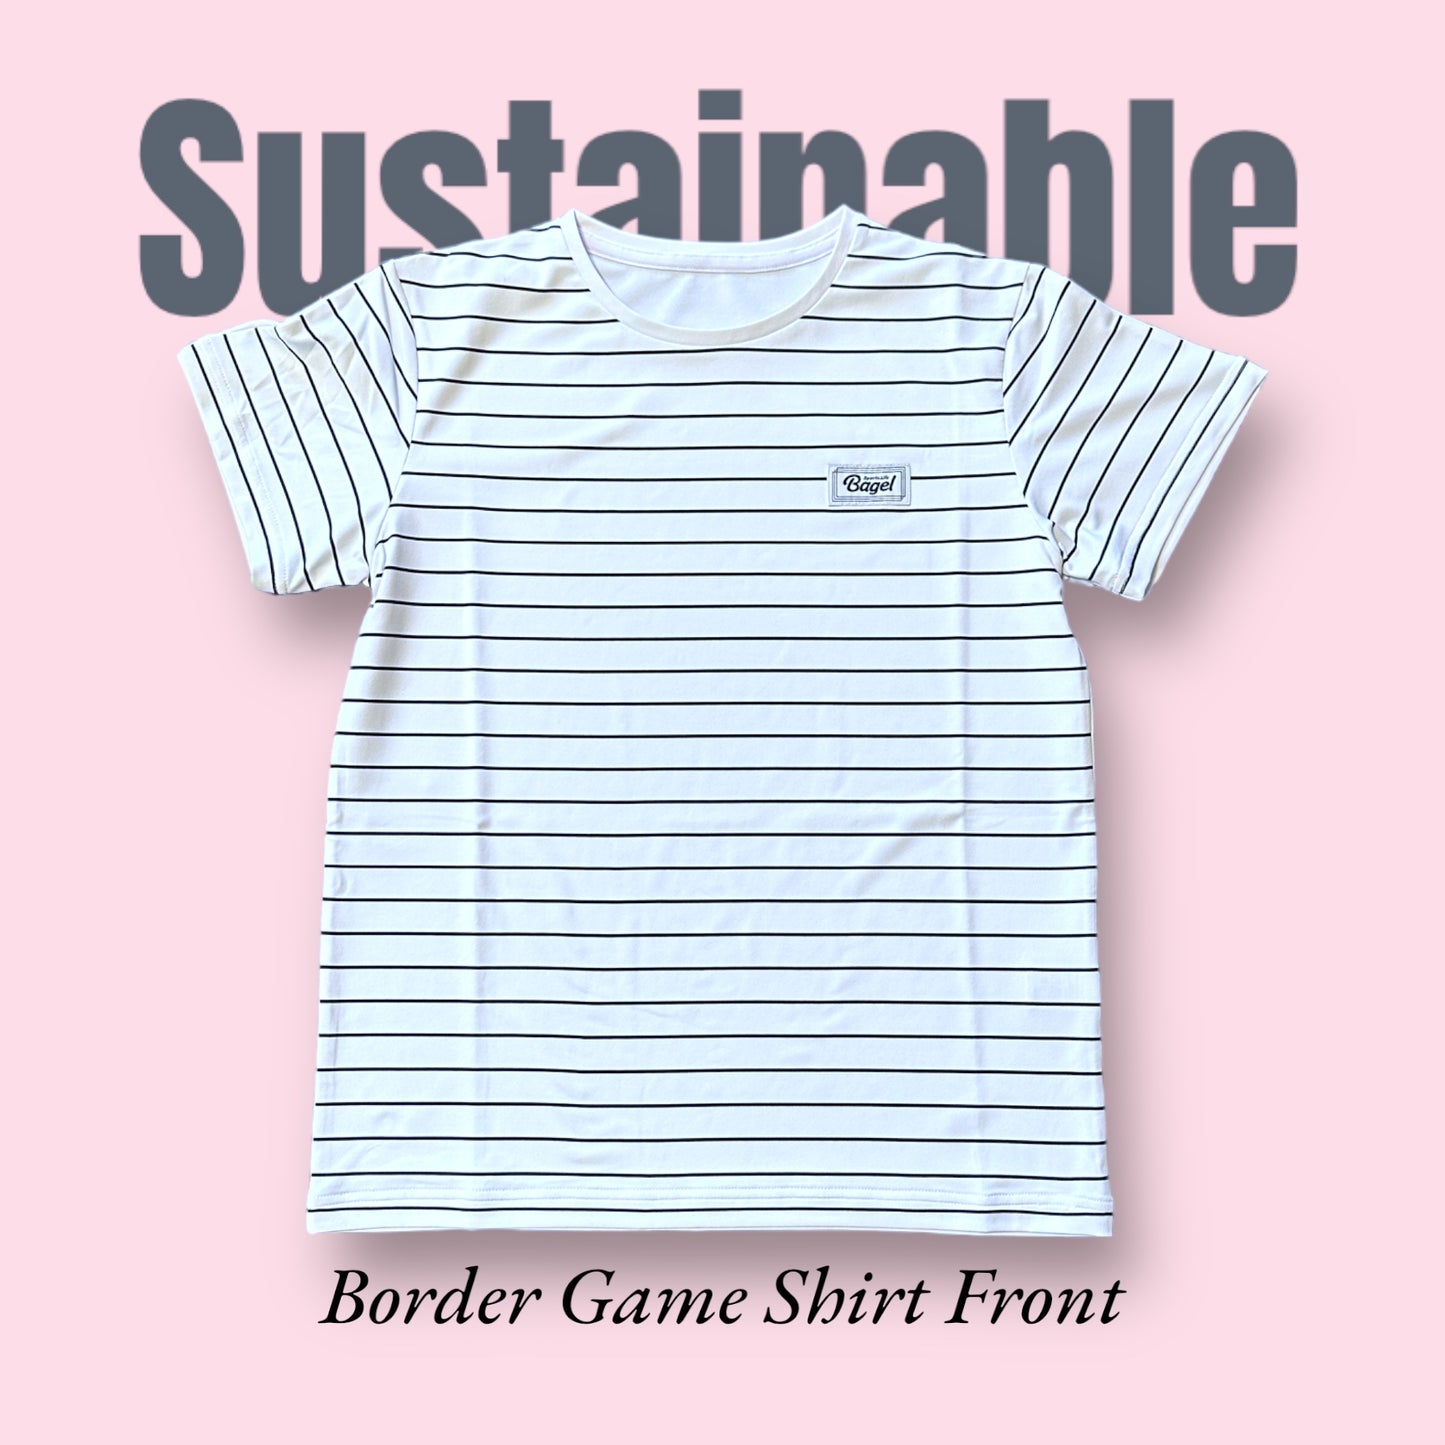 LADIES Sustainable BorderF Game Shirt White